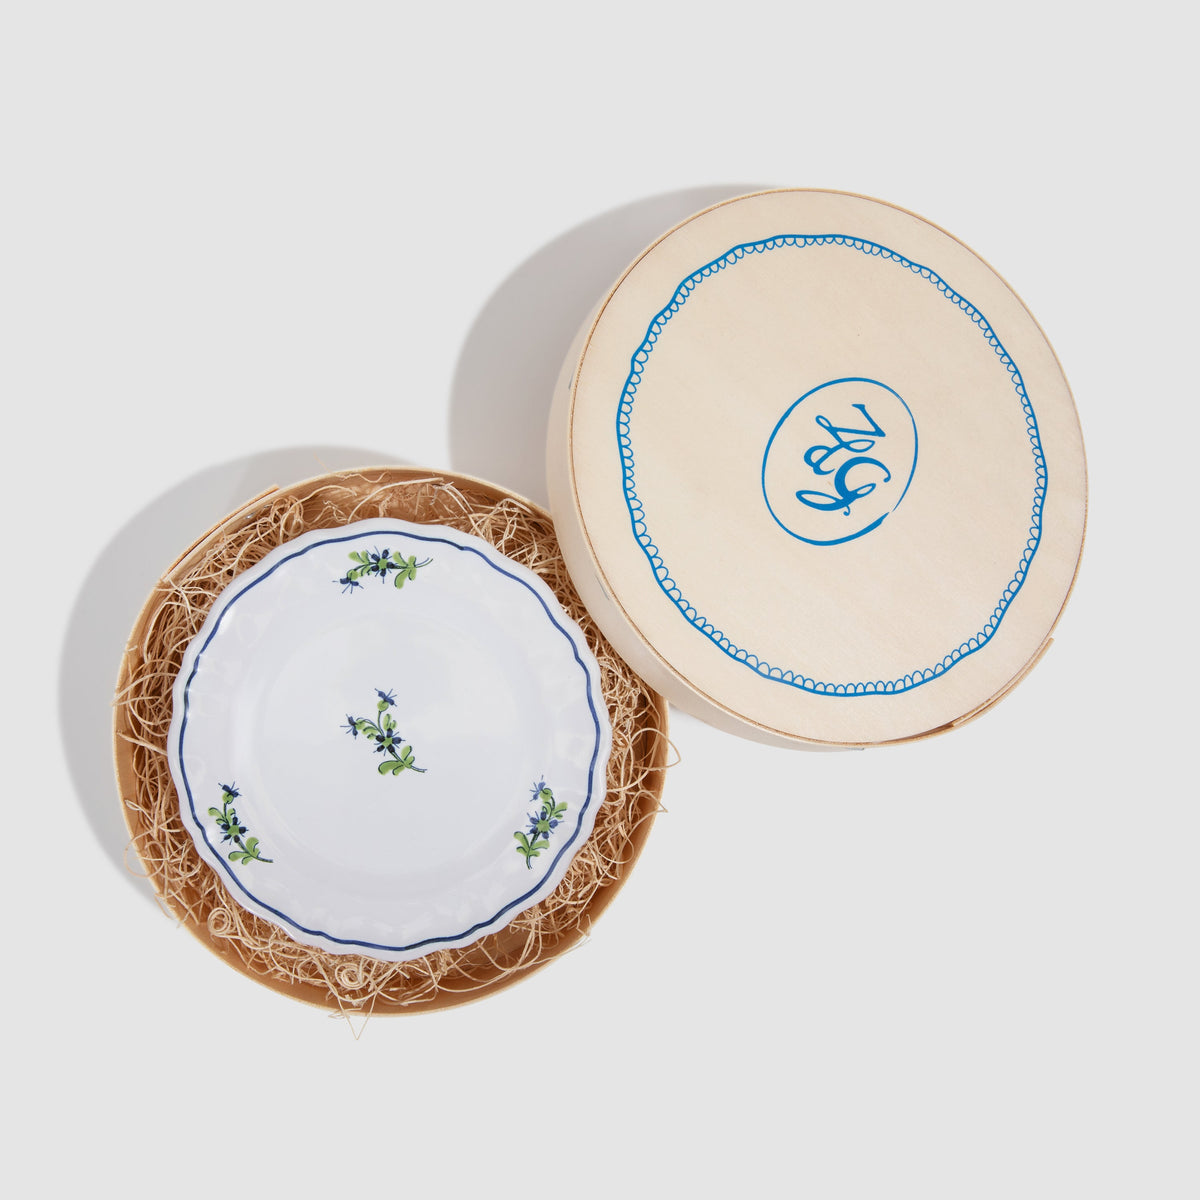 Les Bleuets Round Petite Plate in Bleu Égyptien in Vert